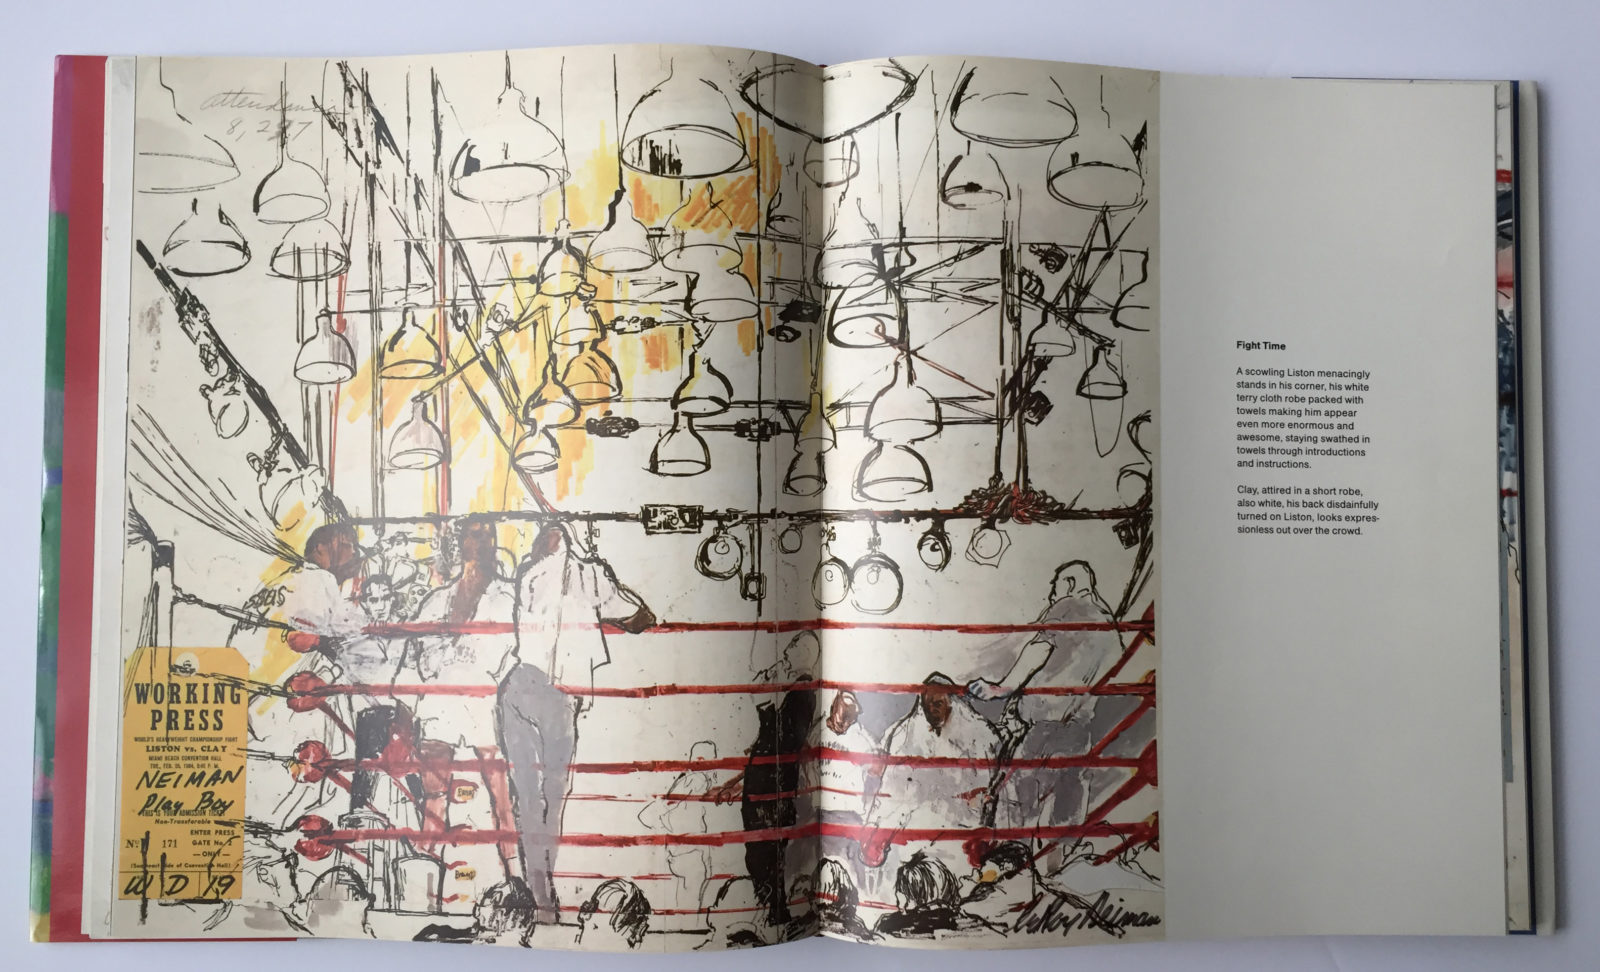 Artwork from, The LeRoy Neiman Sketchbook: 1964 Liston vs. Clay, 1965 Ali vs. Liston book